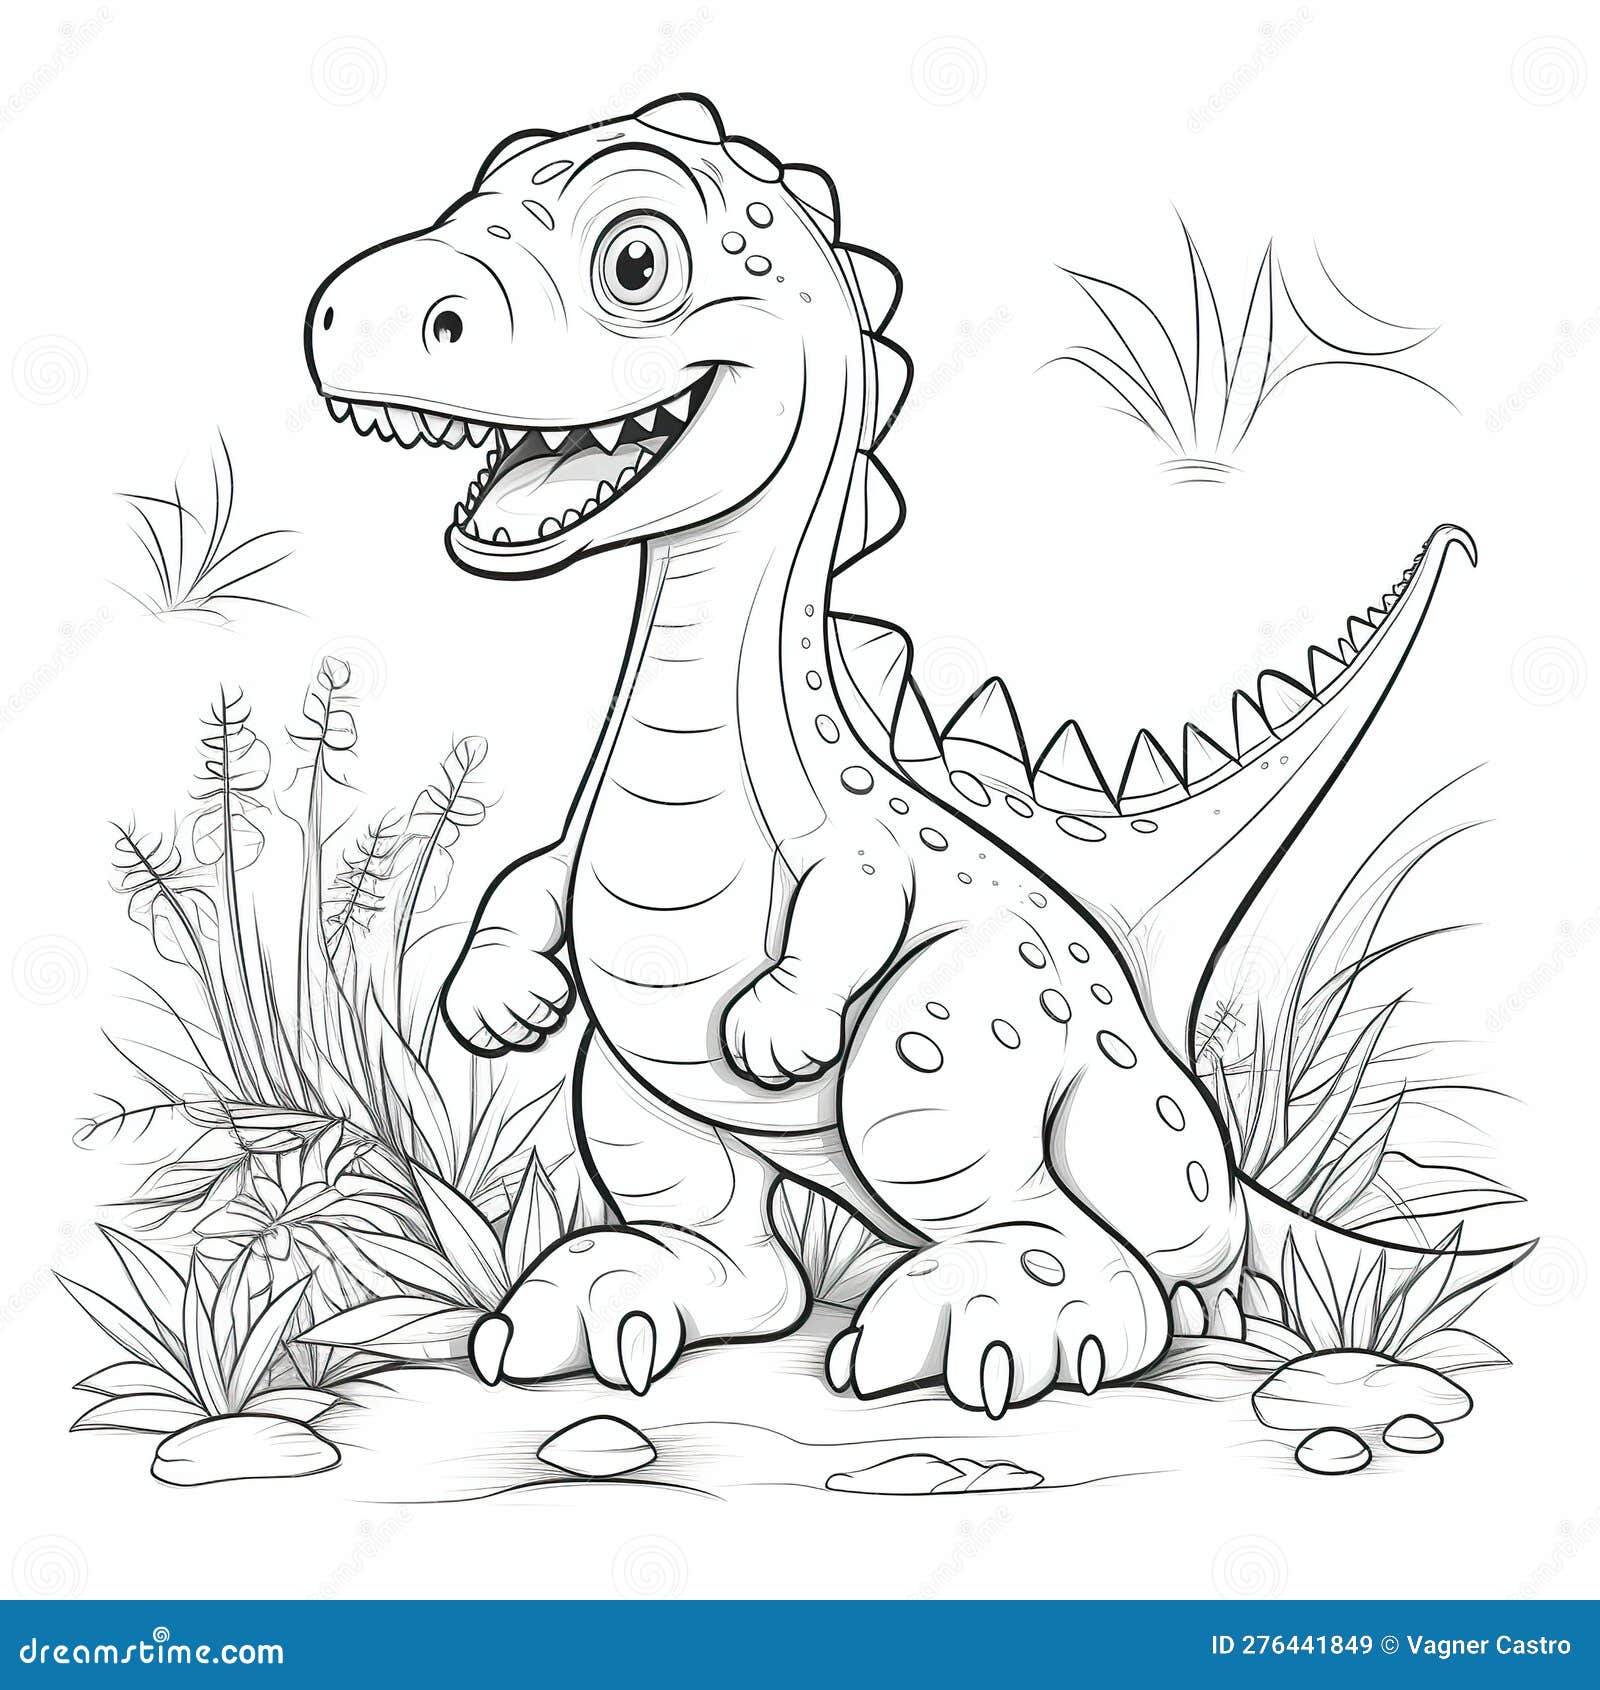 Realistic dinosaur coloring stock illustrations â realistic dinosaur coloring stock illustrations vectors clipart